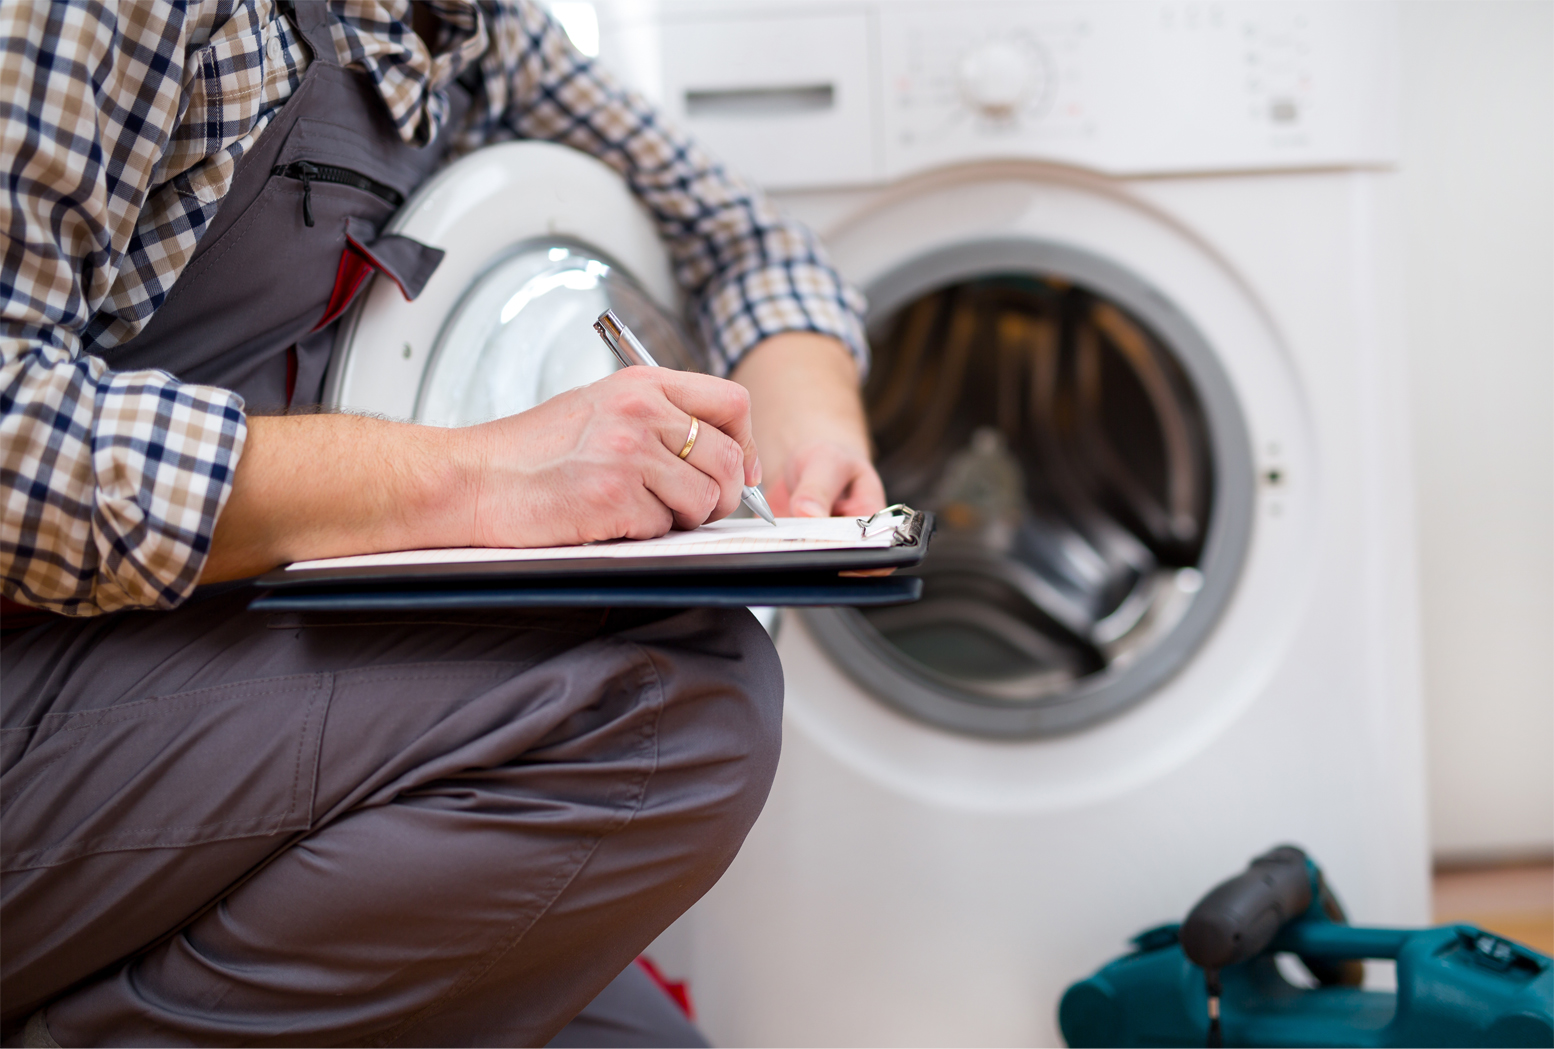 An appliance repair main crouching by a washing machine while writing on a clipboard